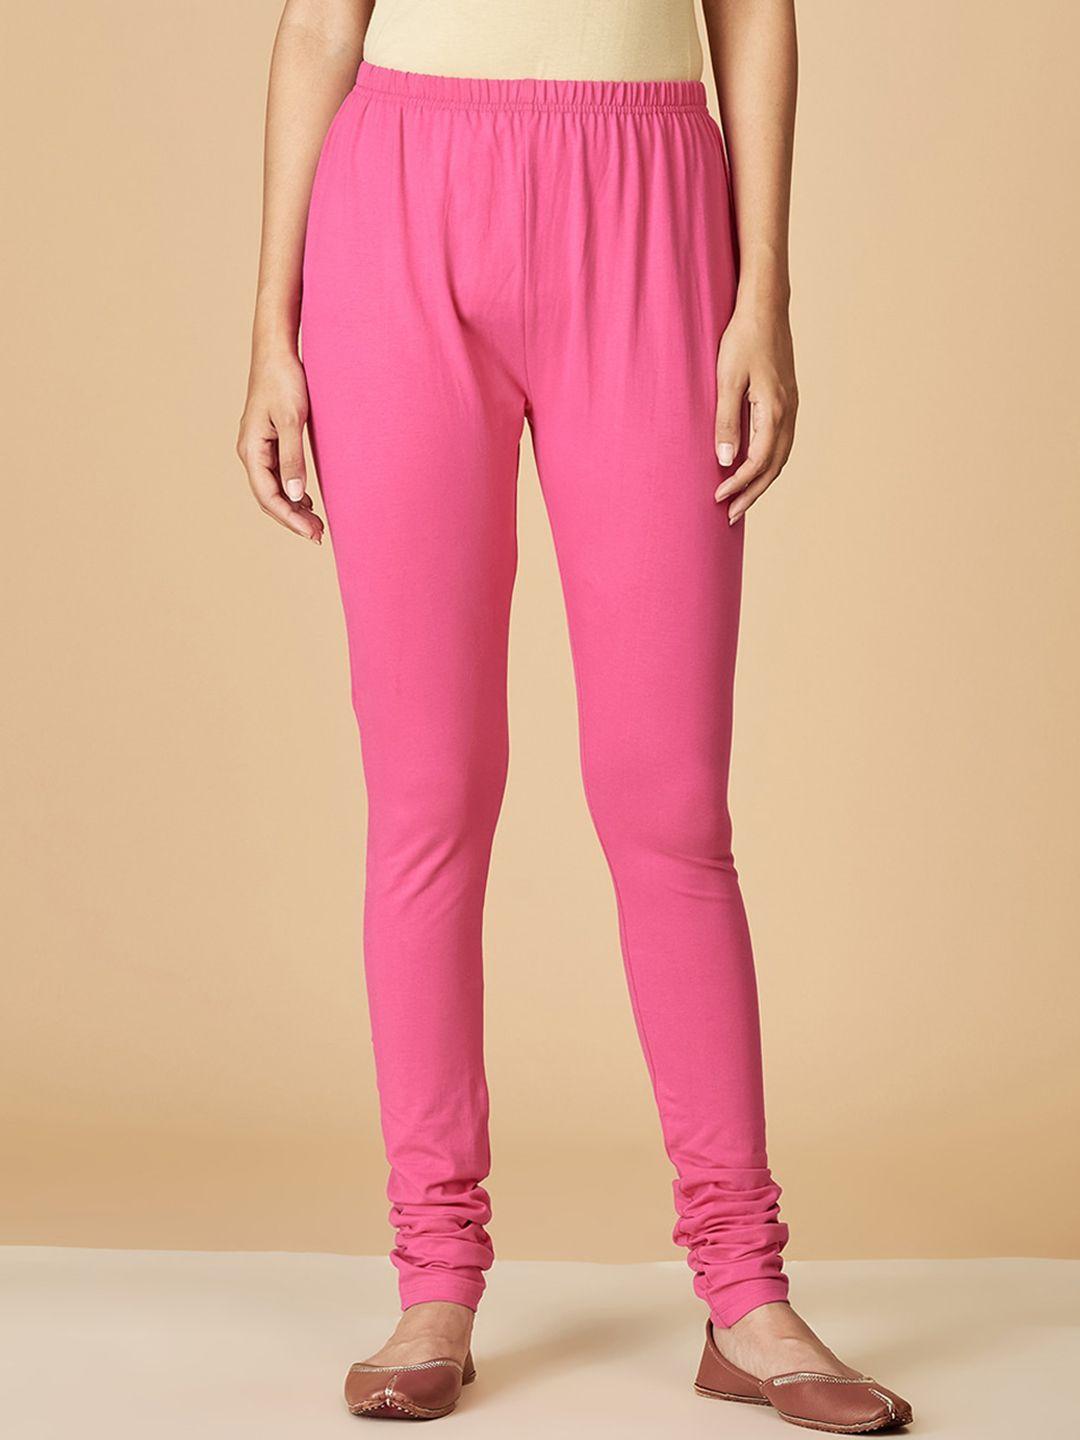 fabindia pink churidar length cotton leggings